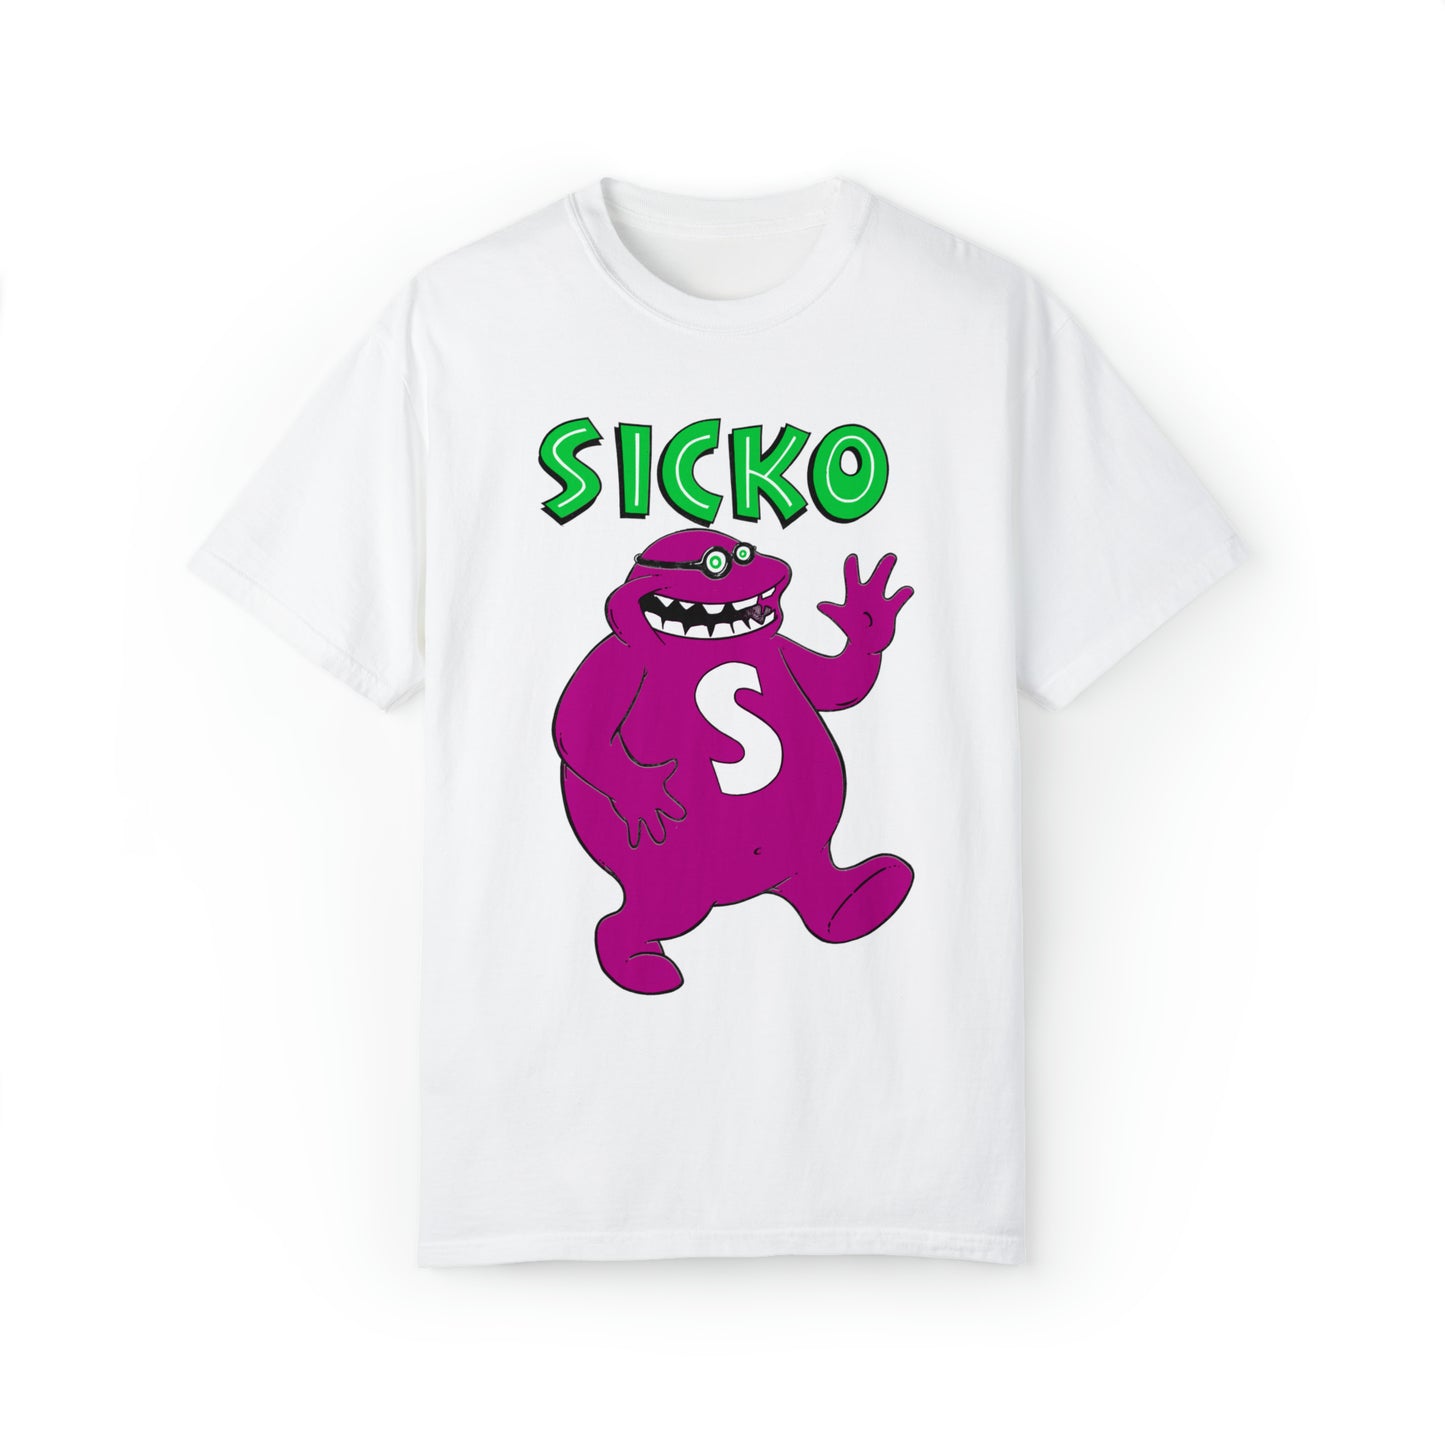 Sicko Sickie Tshirt